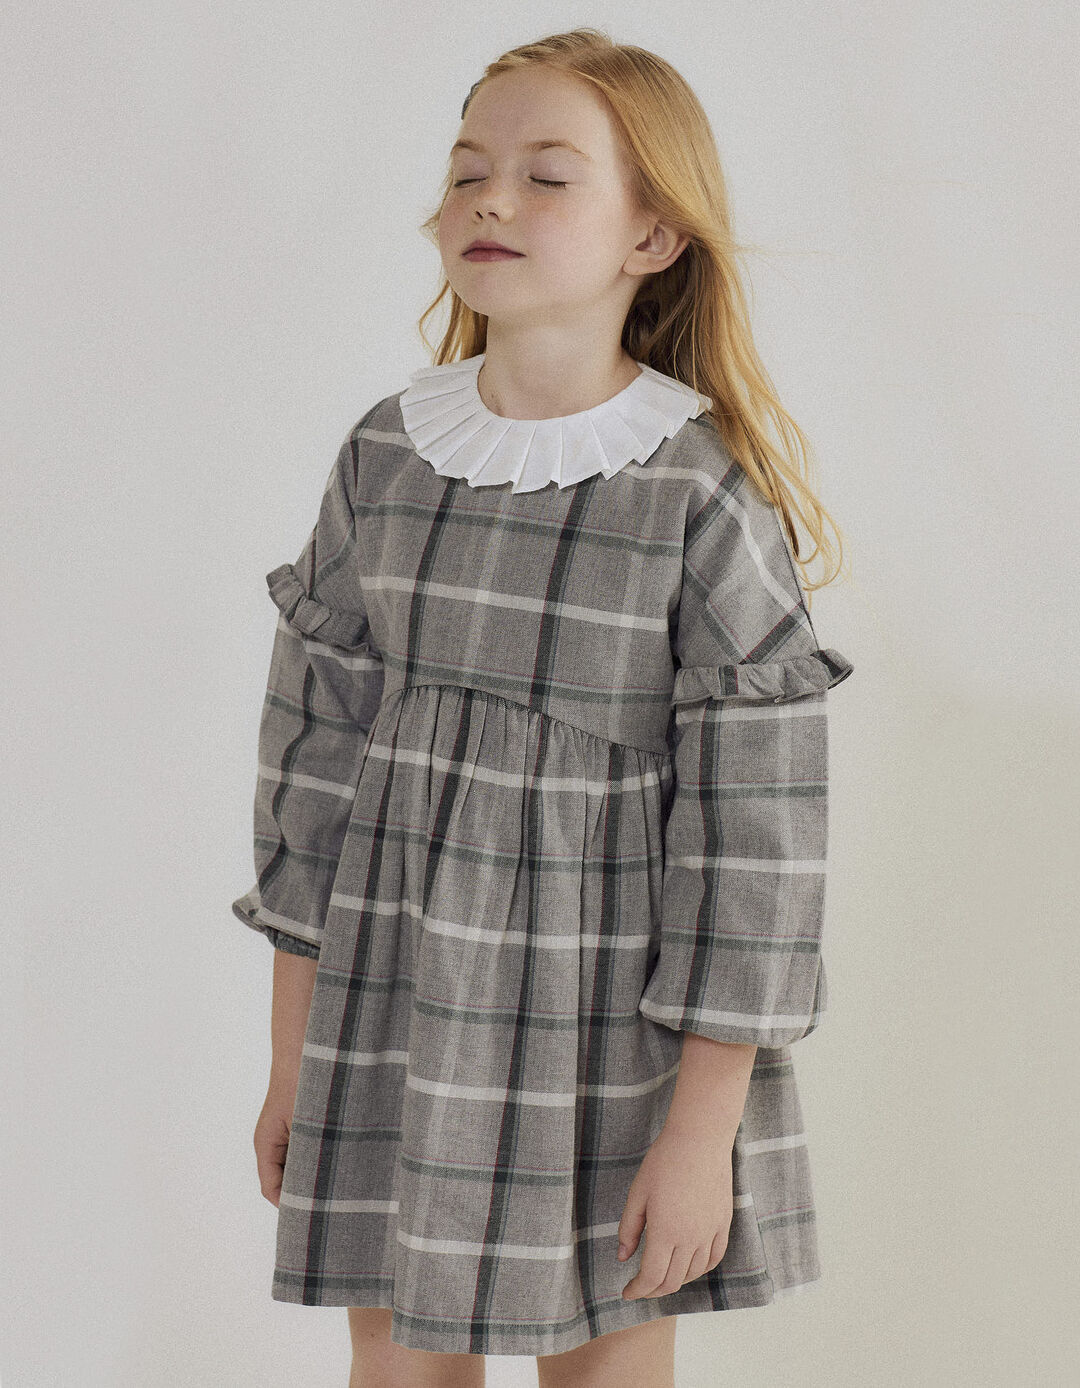 Long Sleeve Checkered Dress for Girls, Gray